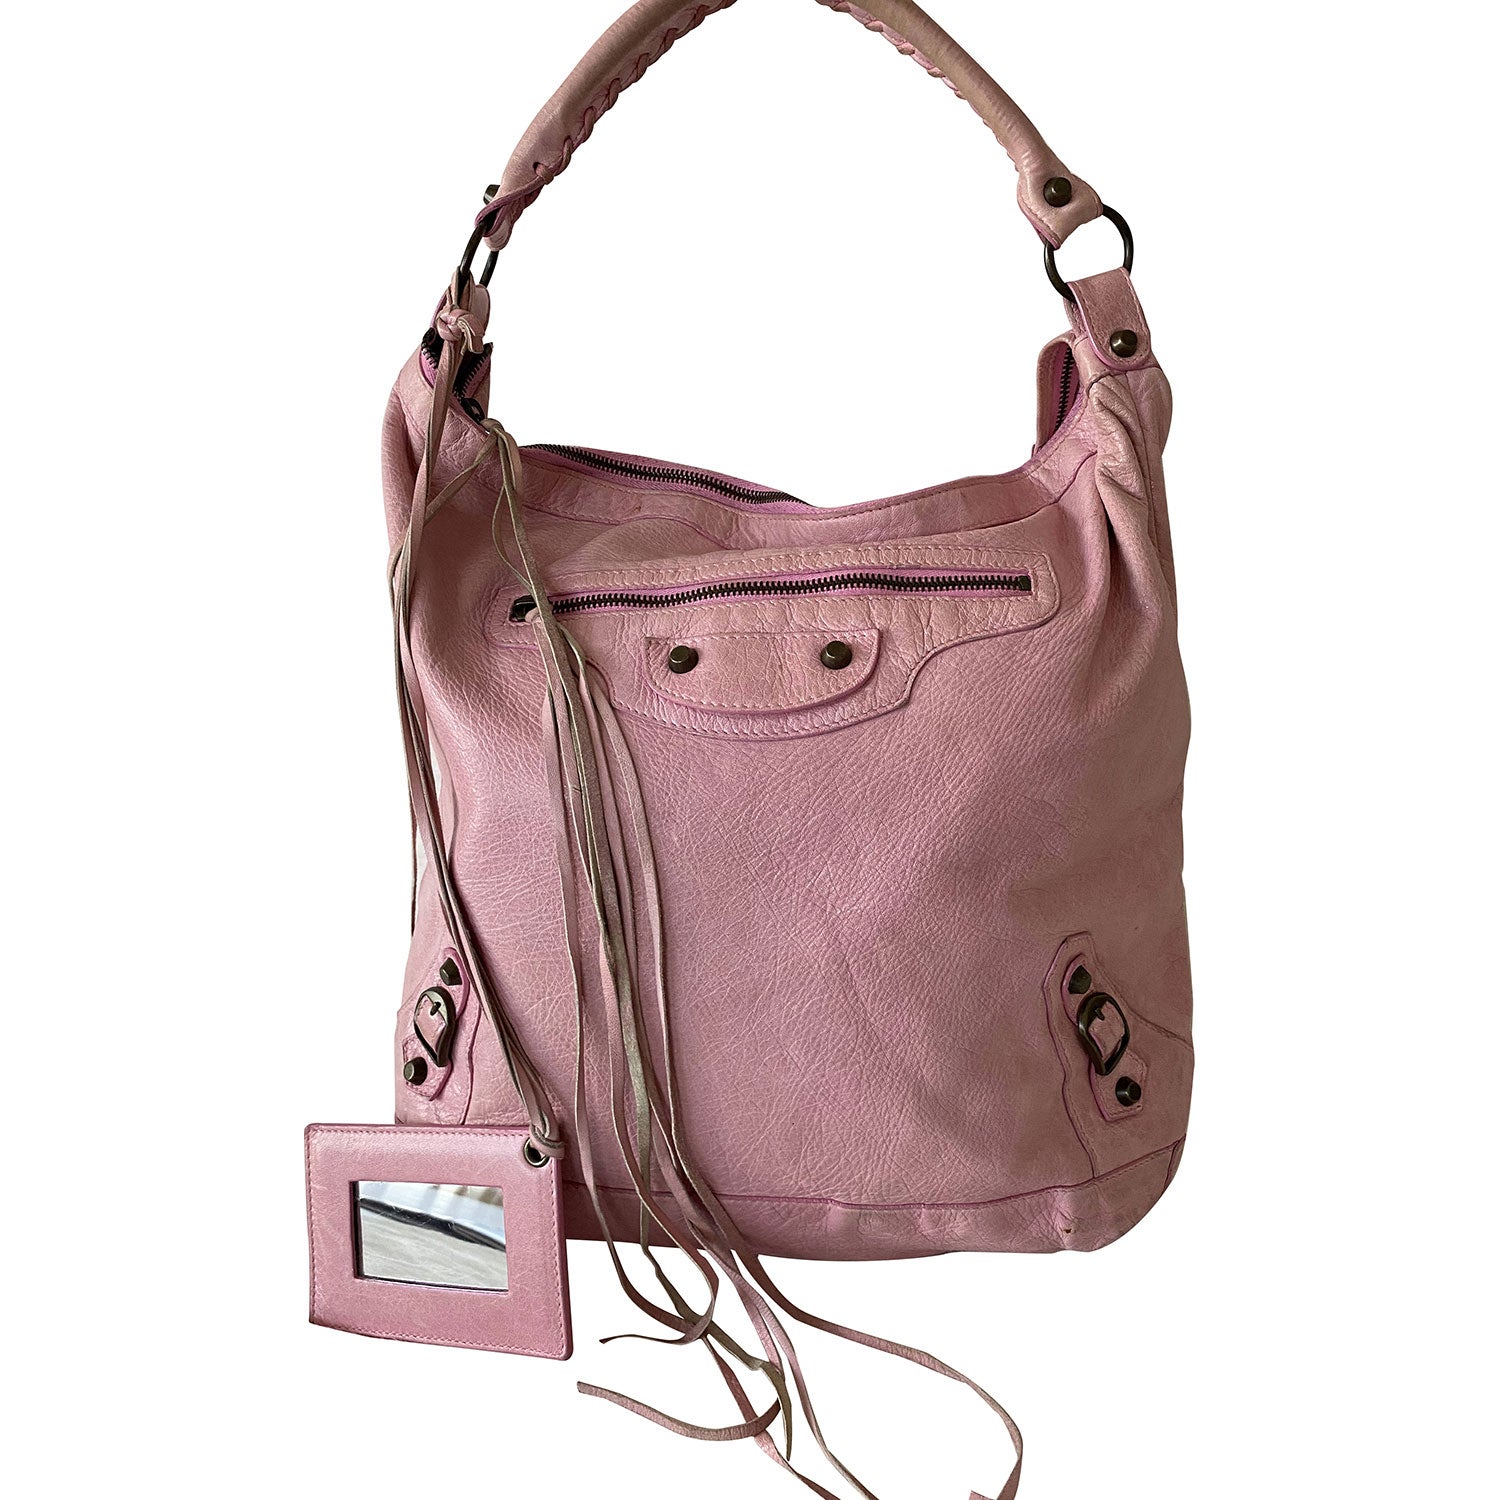 Shop authentic Balenciaga Hobo Bag at for just 350.00